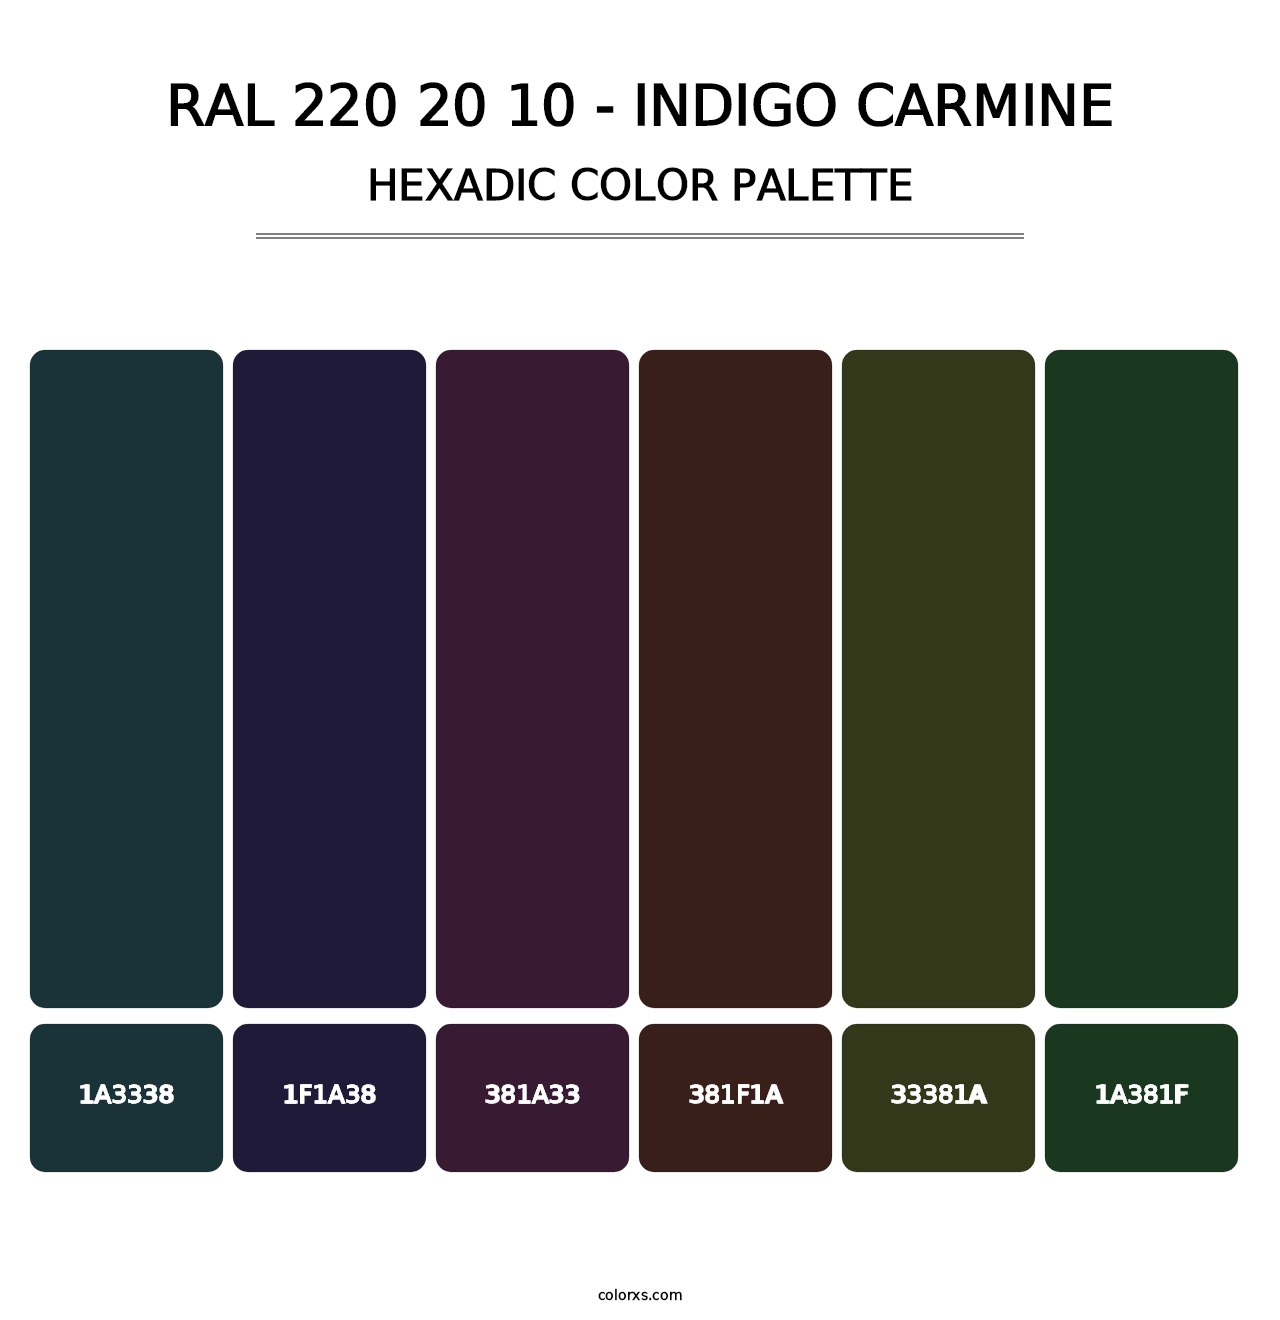 RAL 220 20 10 - Indigo Carmine - Hexadic Color Palette